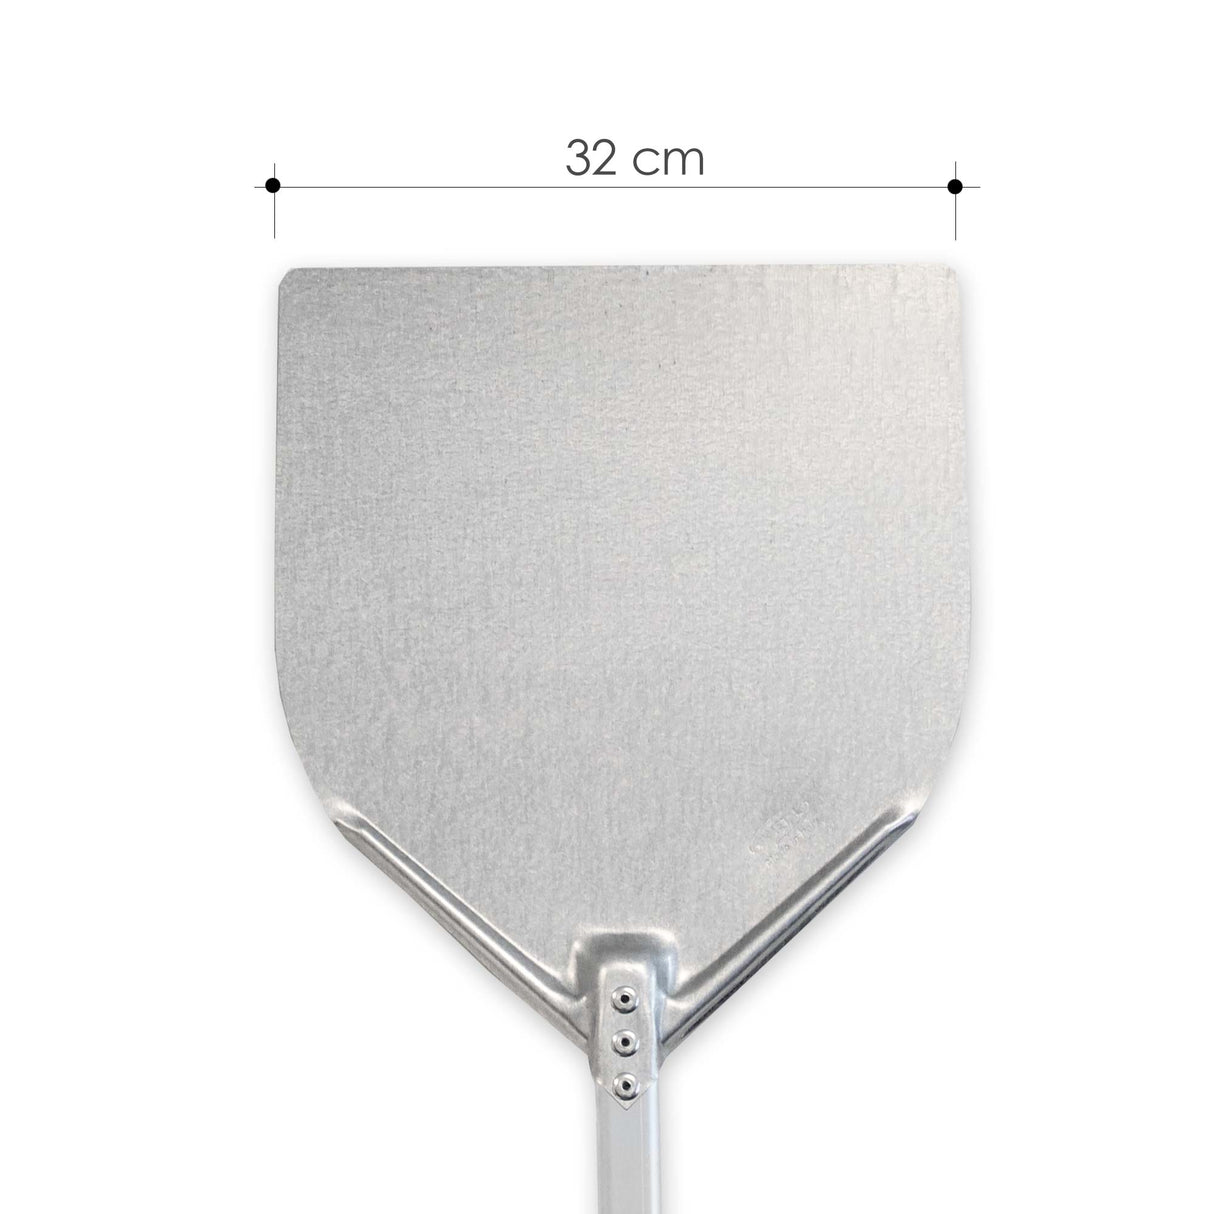 Pizzaschaufel 32 cm Komplett Aluminium GI-Metal - CPGASTRO